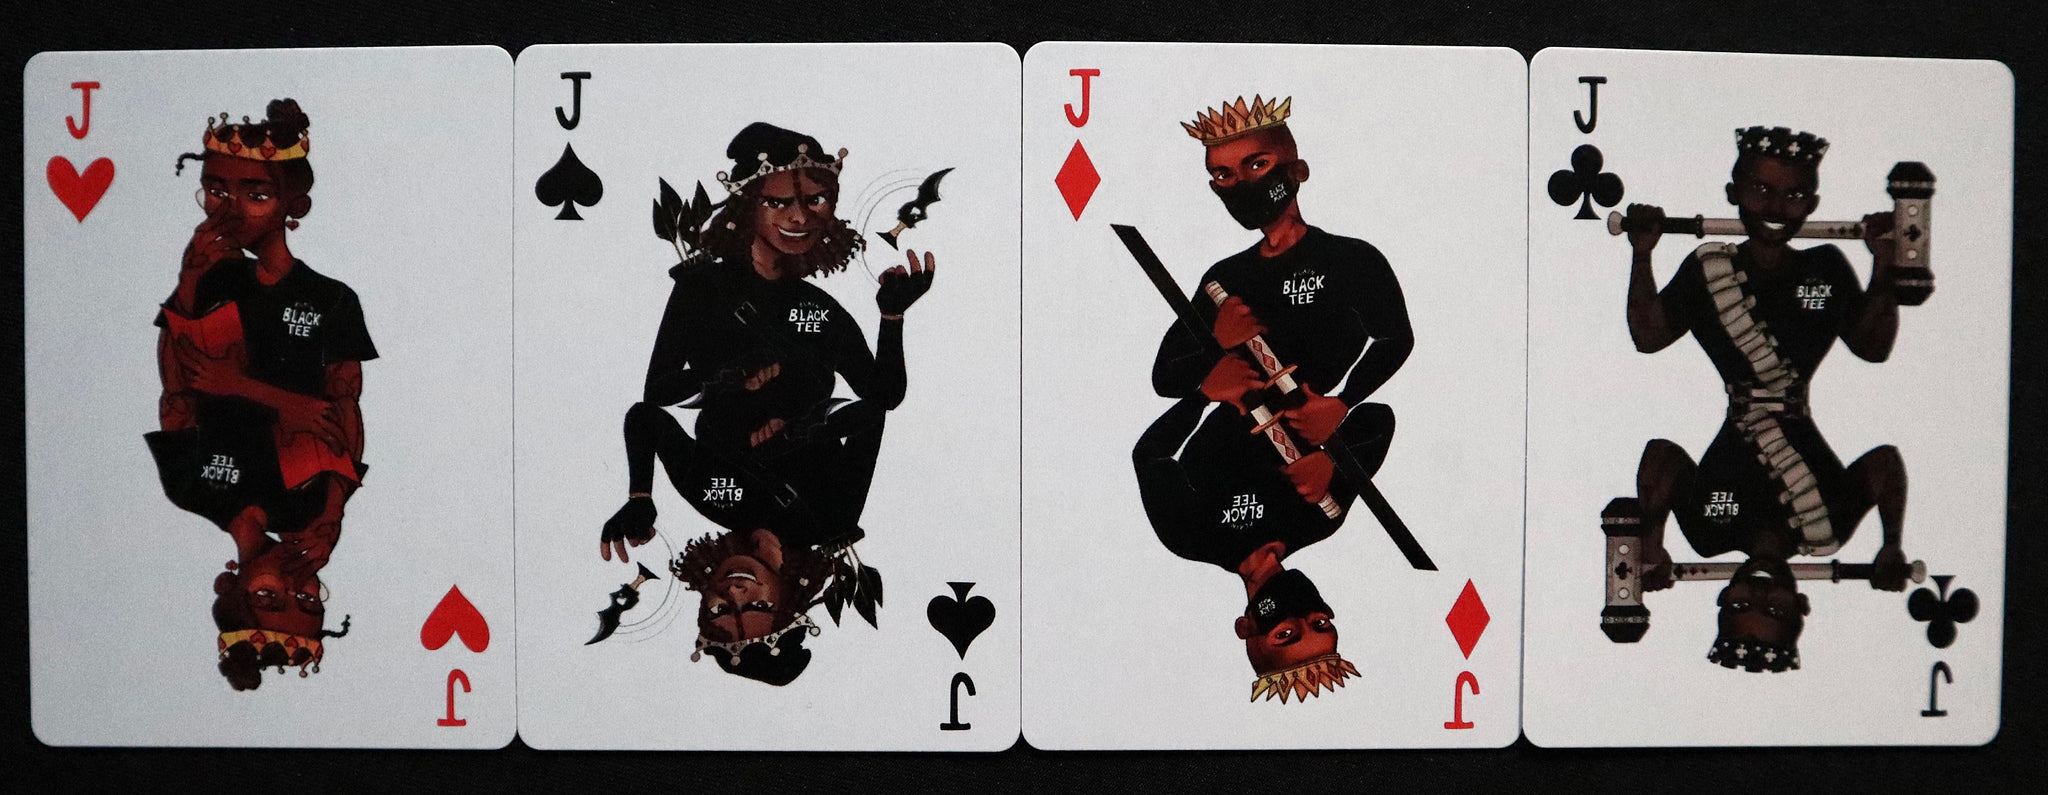 plain decks, plain black cards, black people on playing cards, bespoke playing cards, high quality playing cards, it is what it is, the plain shop, jack of hearts, jack of spades, jack of diamonds, jack of clubs, black jacks